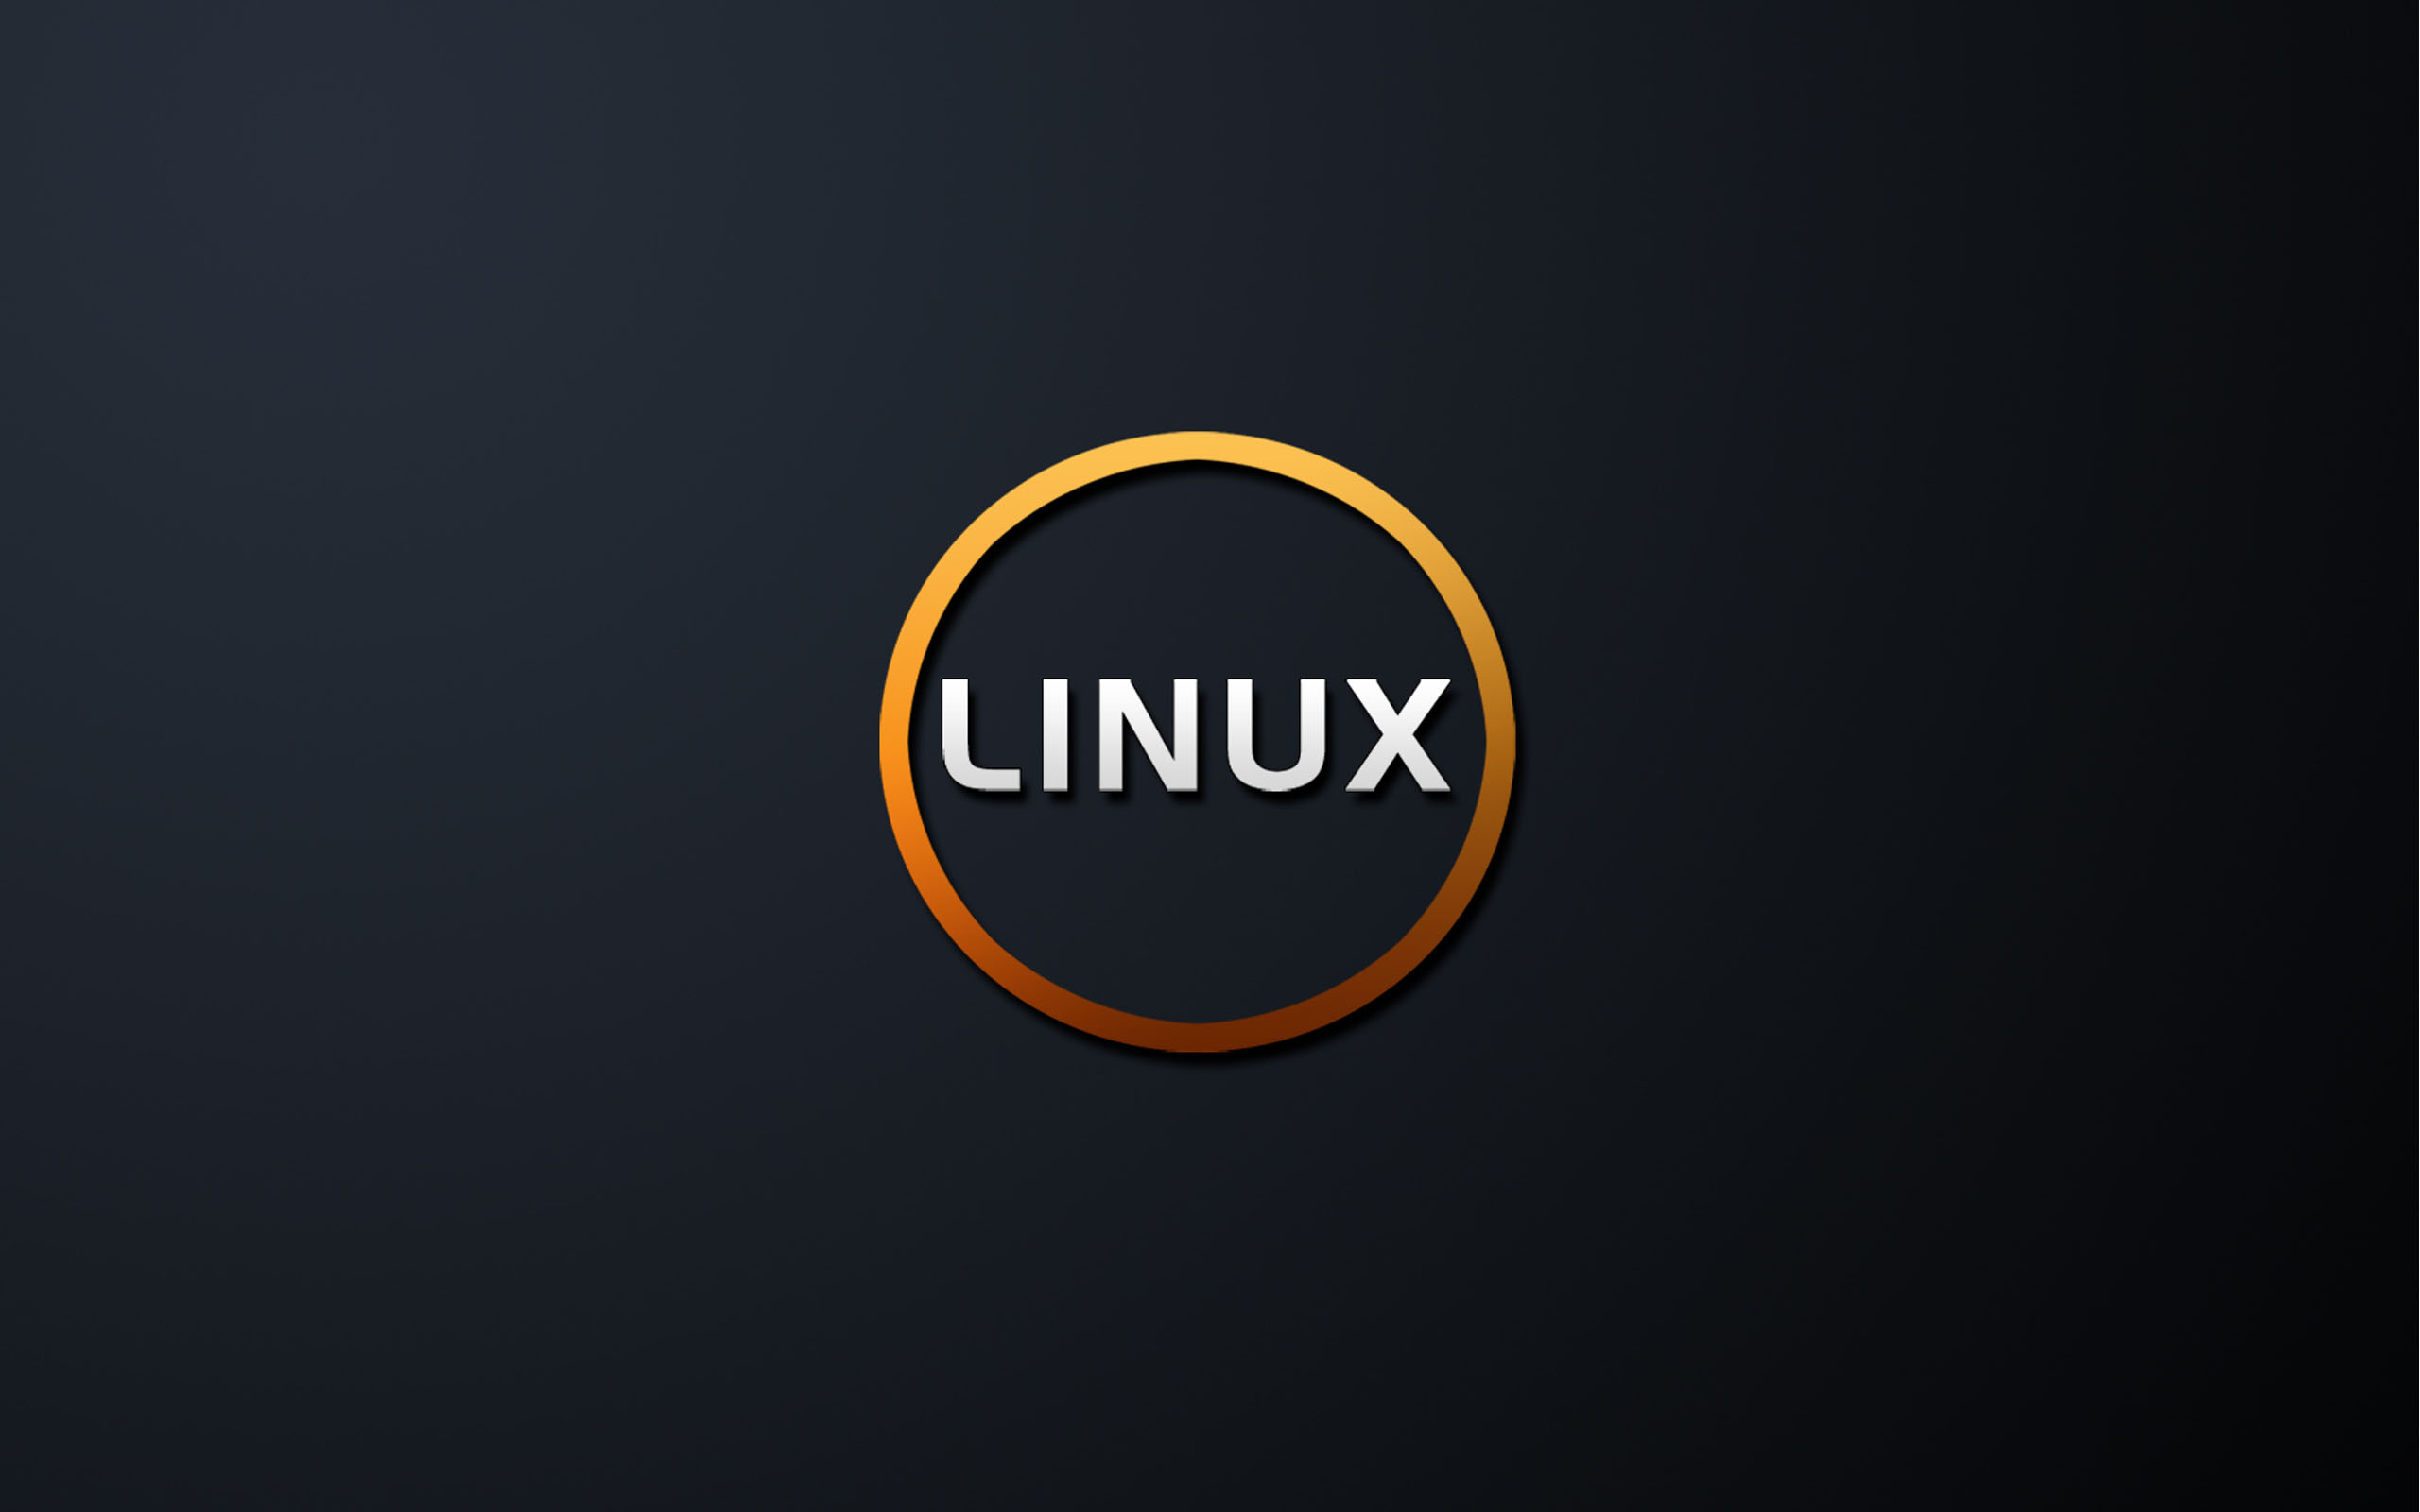 Linux Full HD Widescreen wallpapers for desktop download